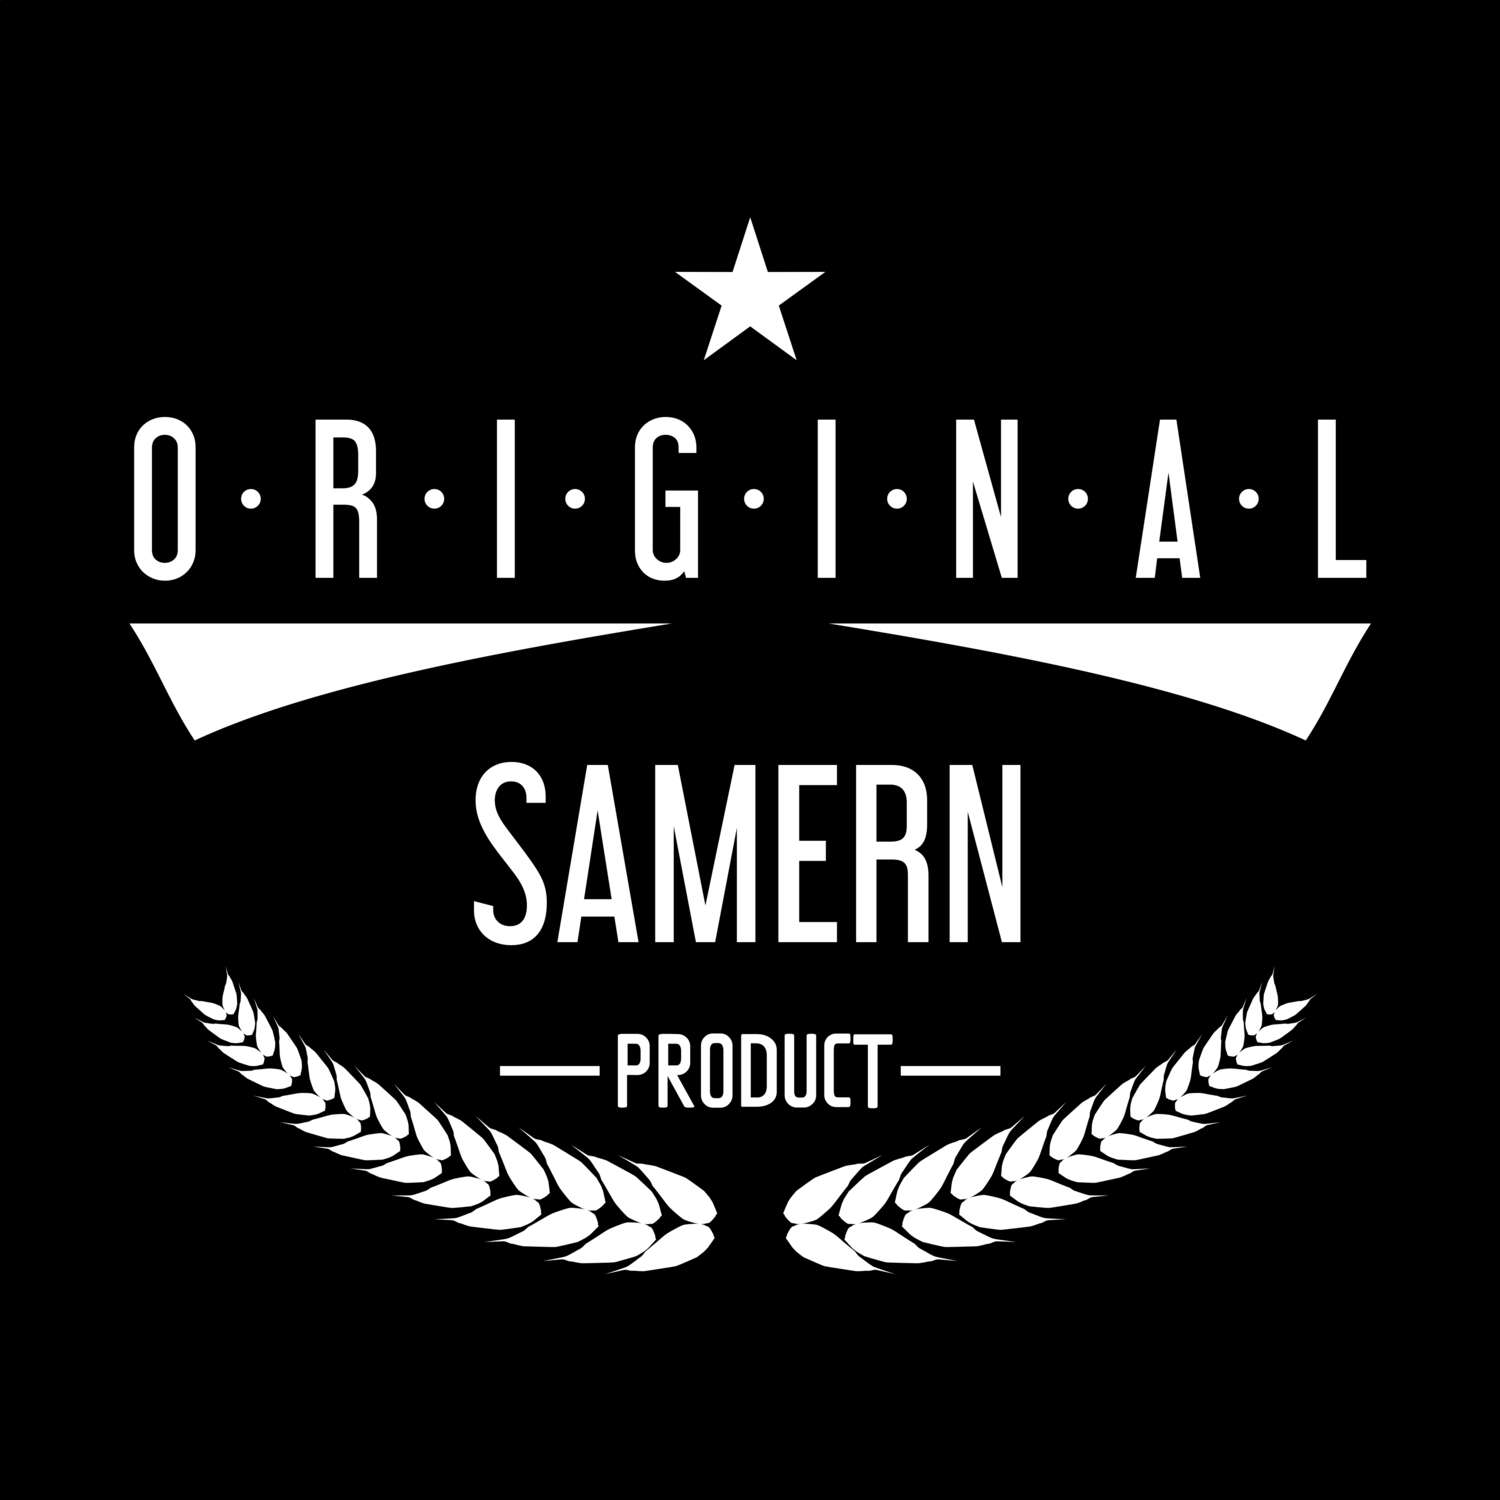 Samern T-Shirt »Original Product«